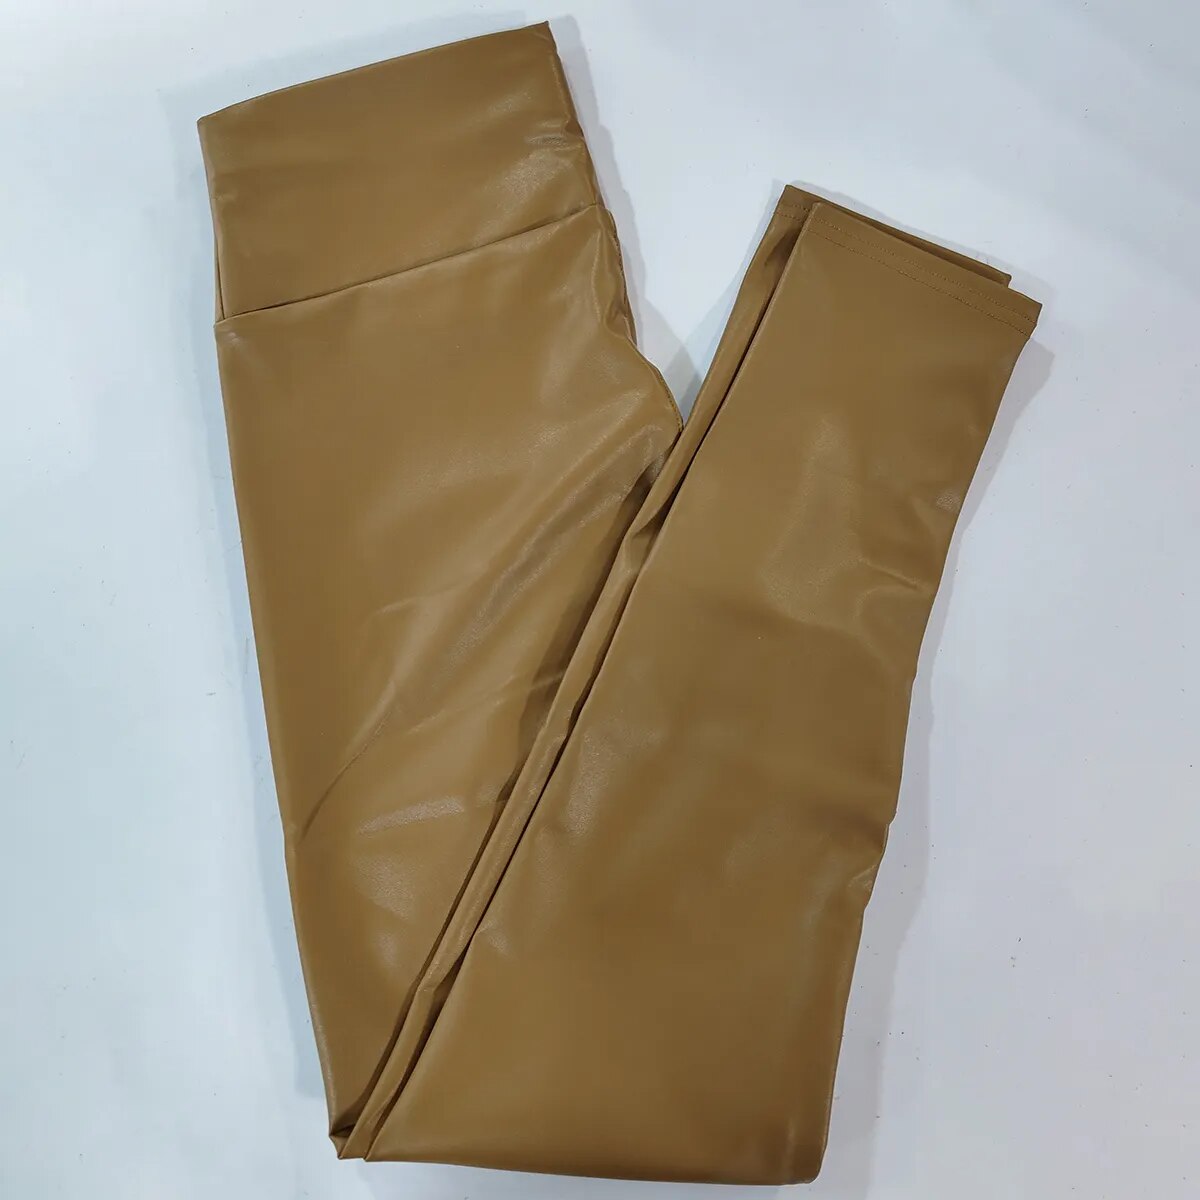 Women Pu Leather Leggings Pants XS-5XL Plus Size Faux Leather Leggings Female Elastic Slim Skinny Sexy Leather Pants Trousers